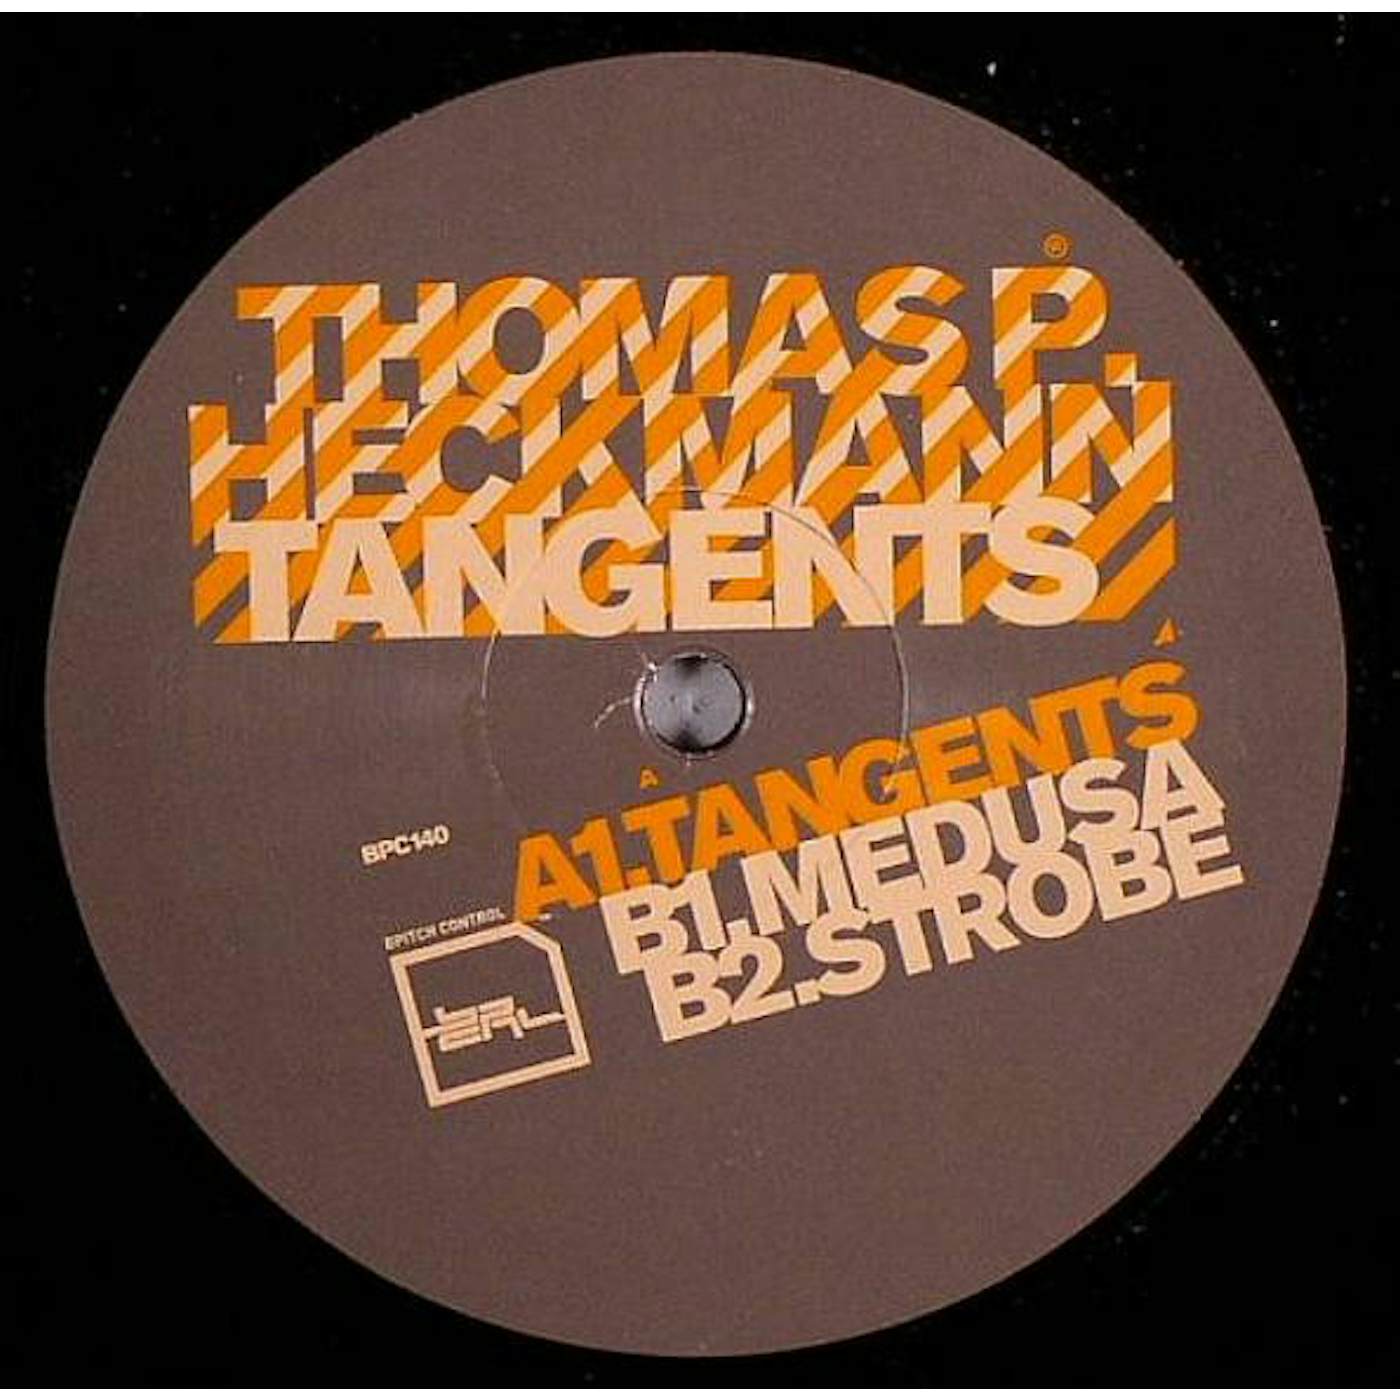 Thomas P. Heckmann Tangents Vinyl Record